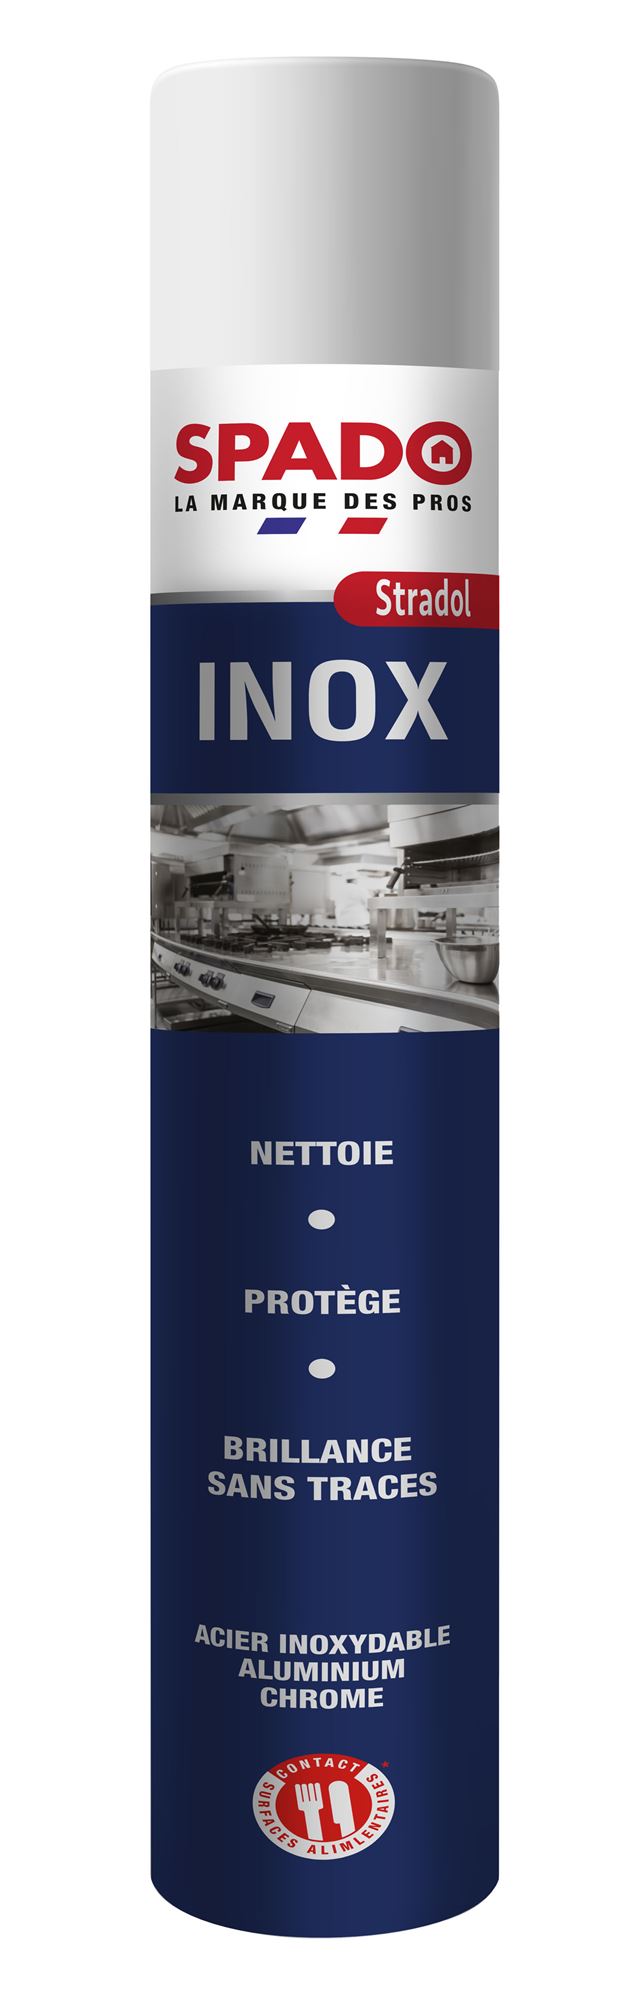 Plaque standard Inox brut brillant